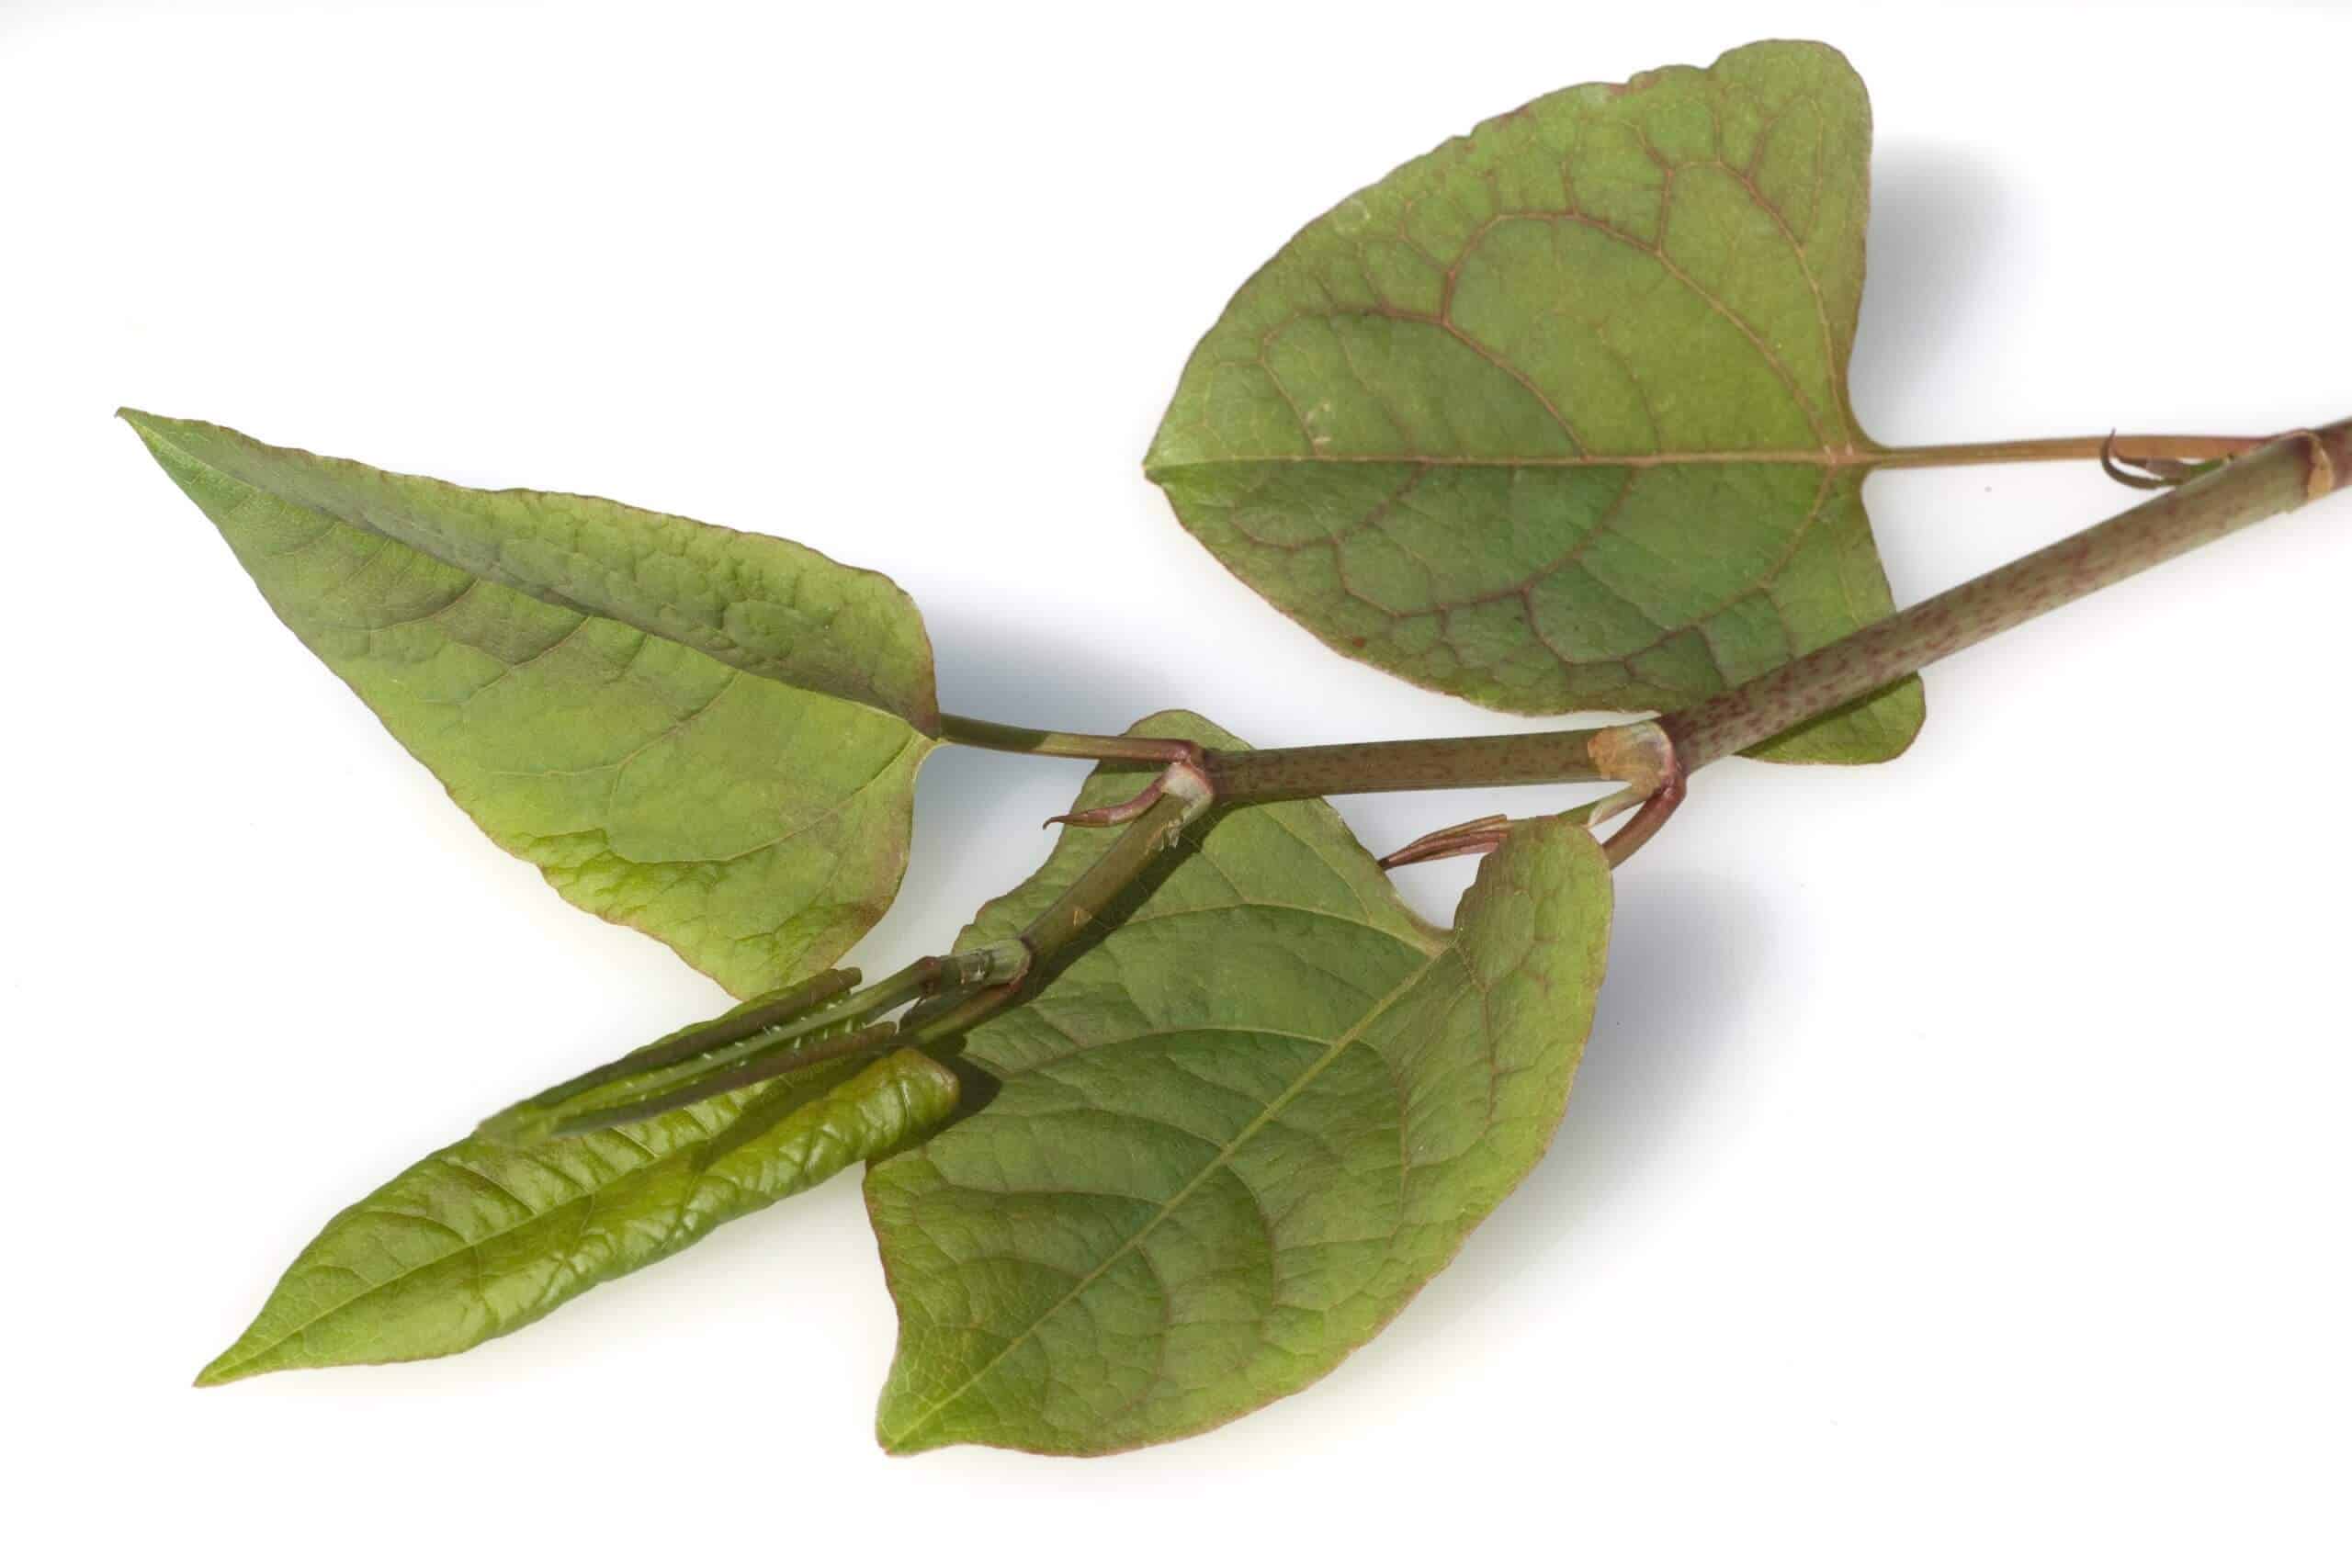 Japanese Knotweed leaf and stem anatomy